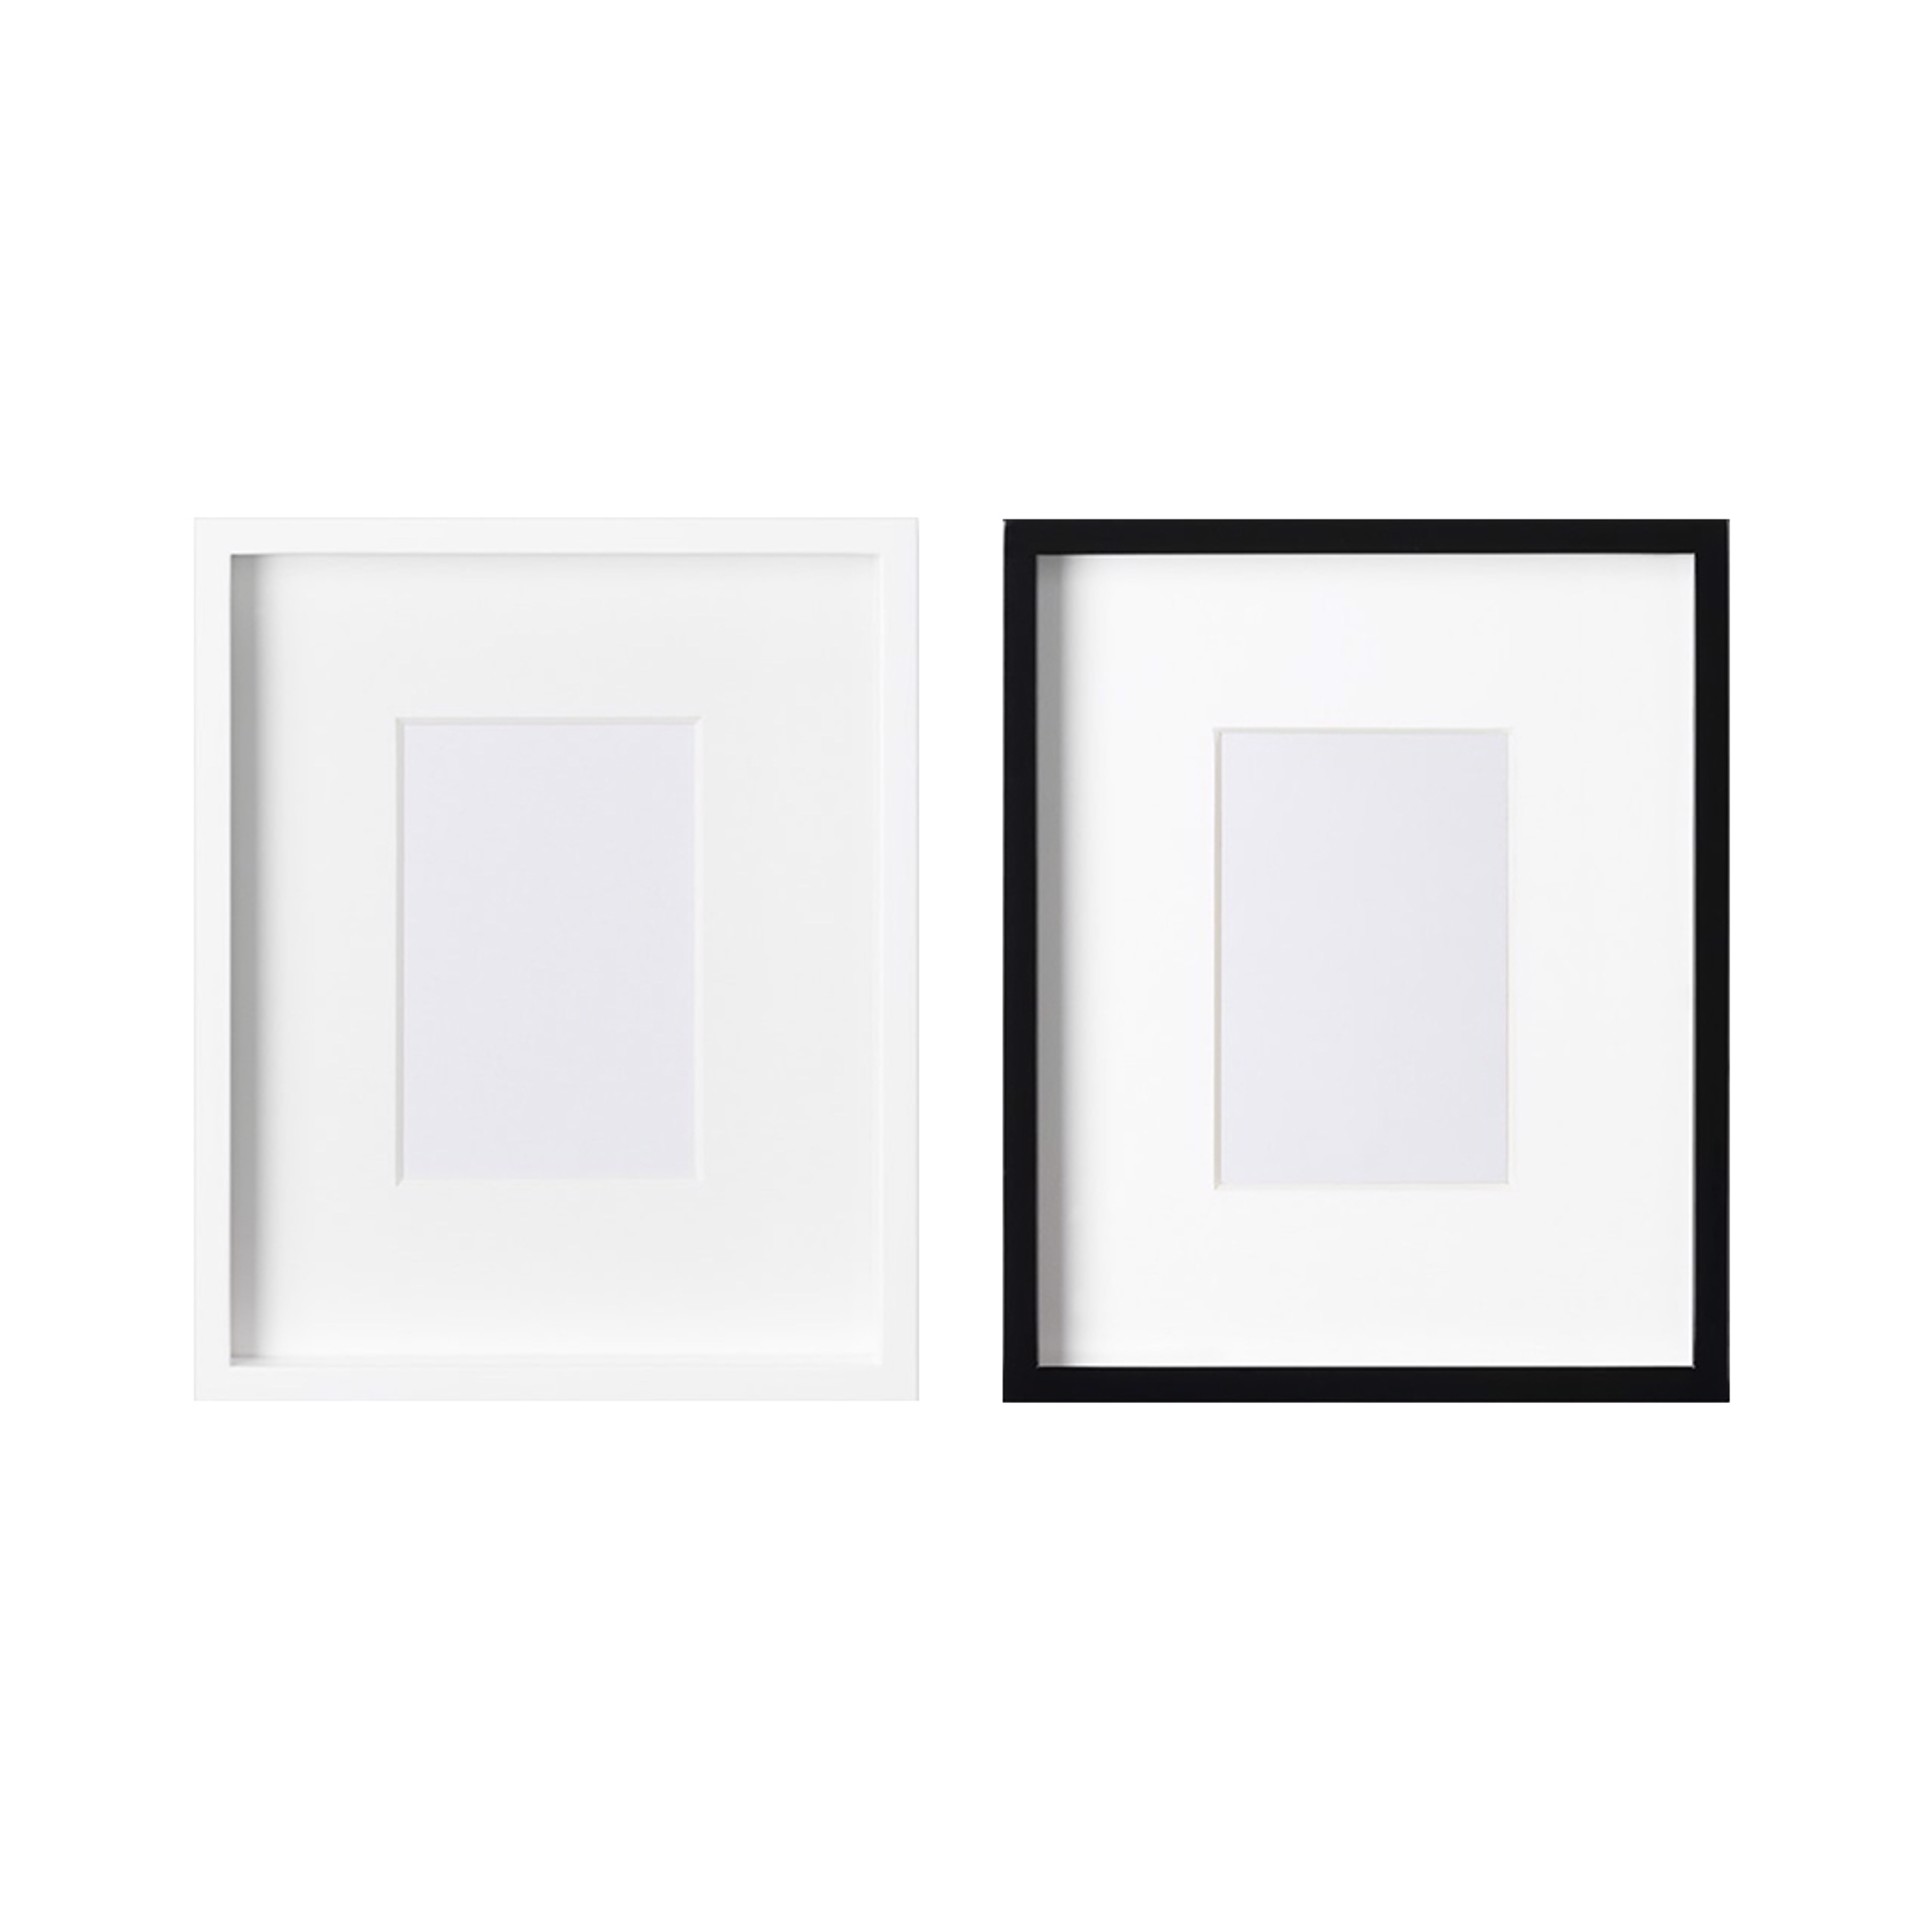 Framing w. UV protective museum glass [white]